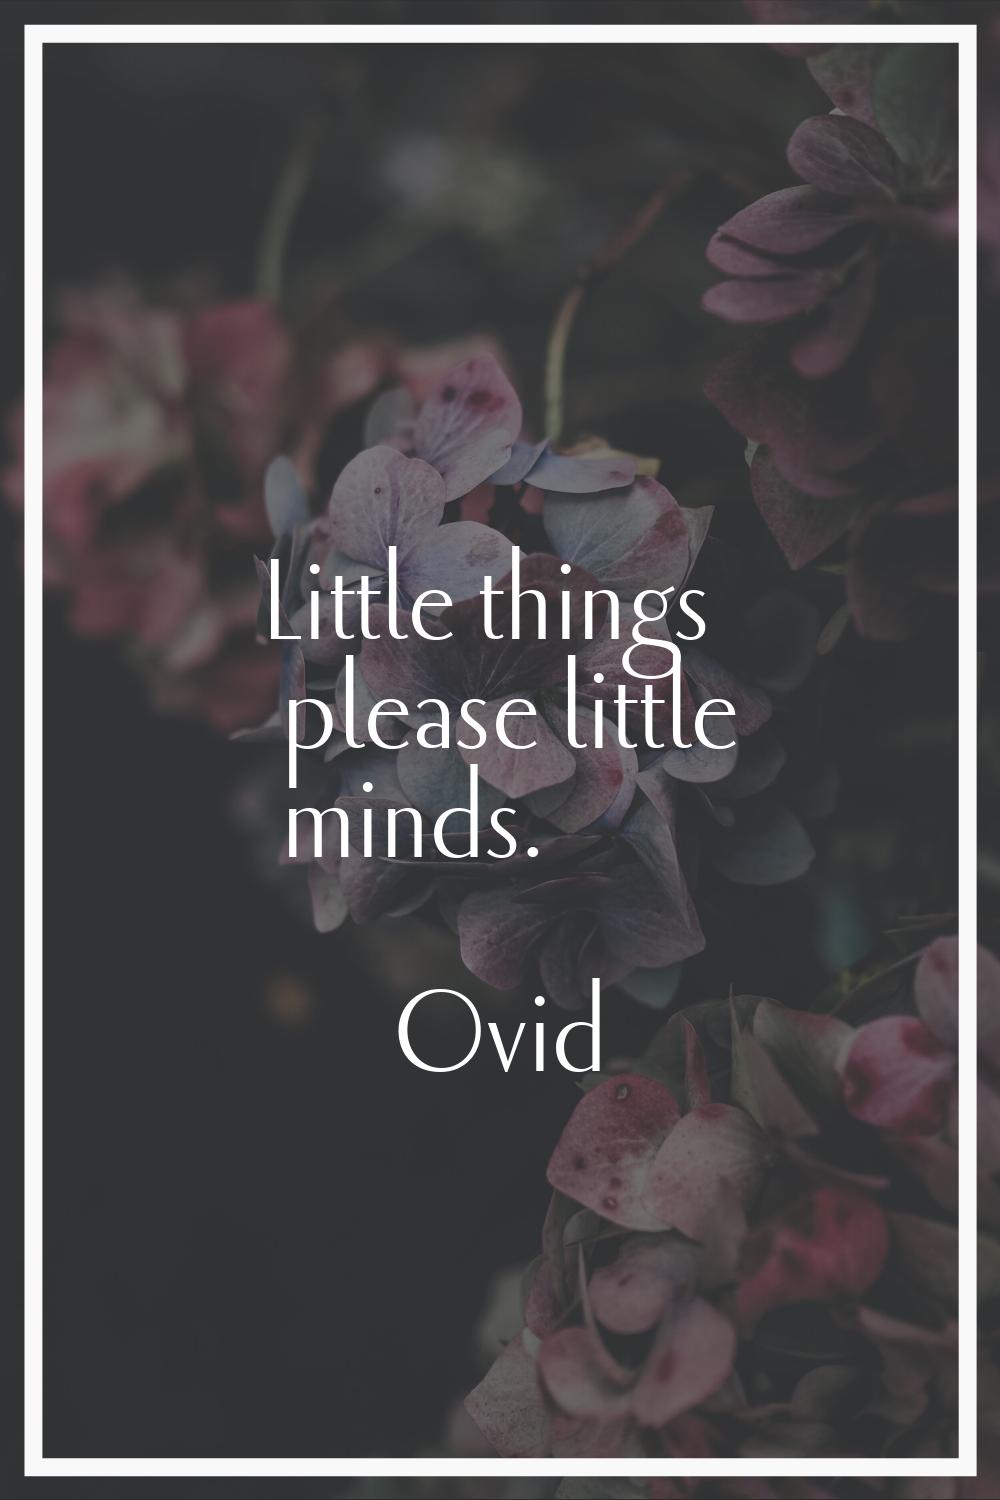 Little things please little minds.